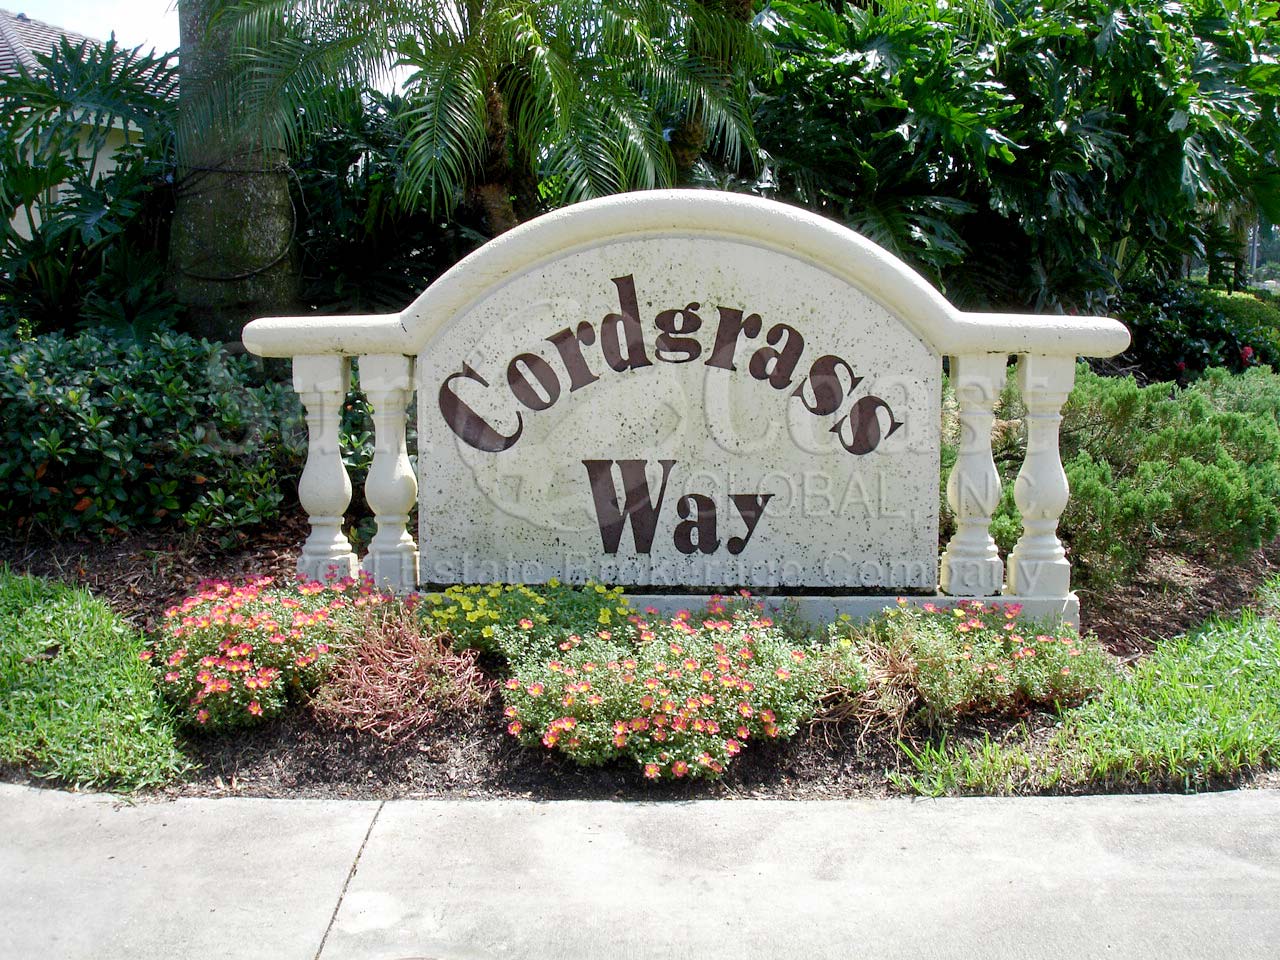 Cordgrass Way non gated community within Cedar Hammock